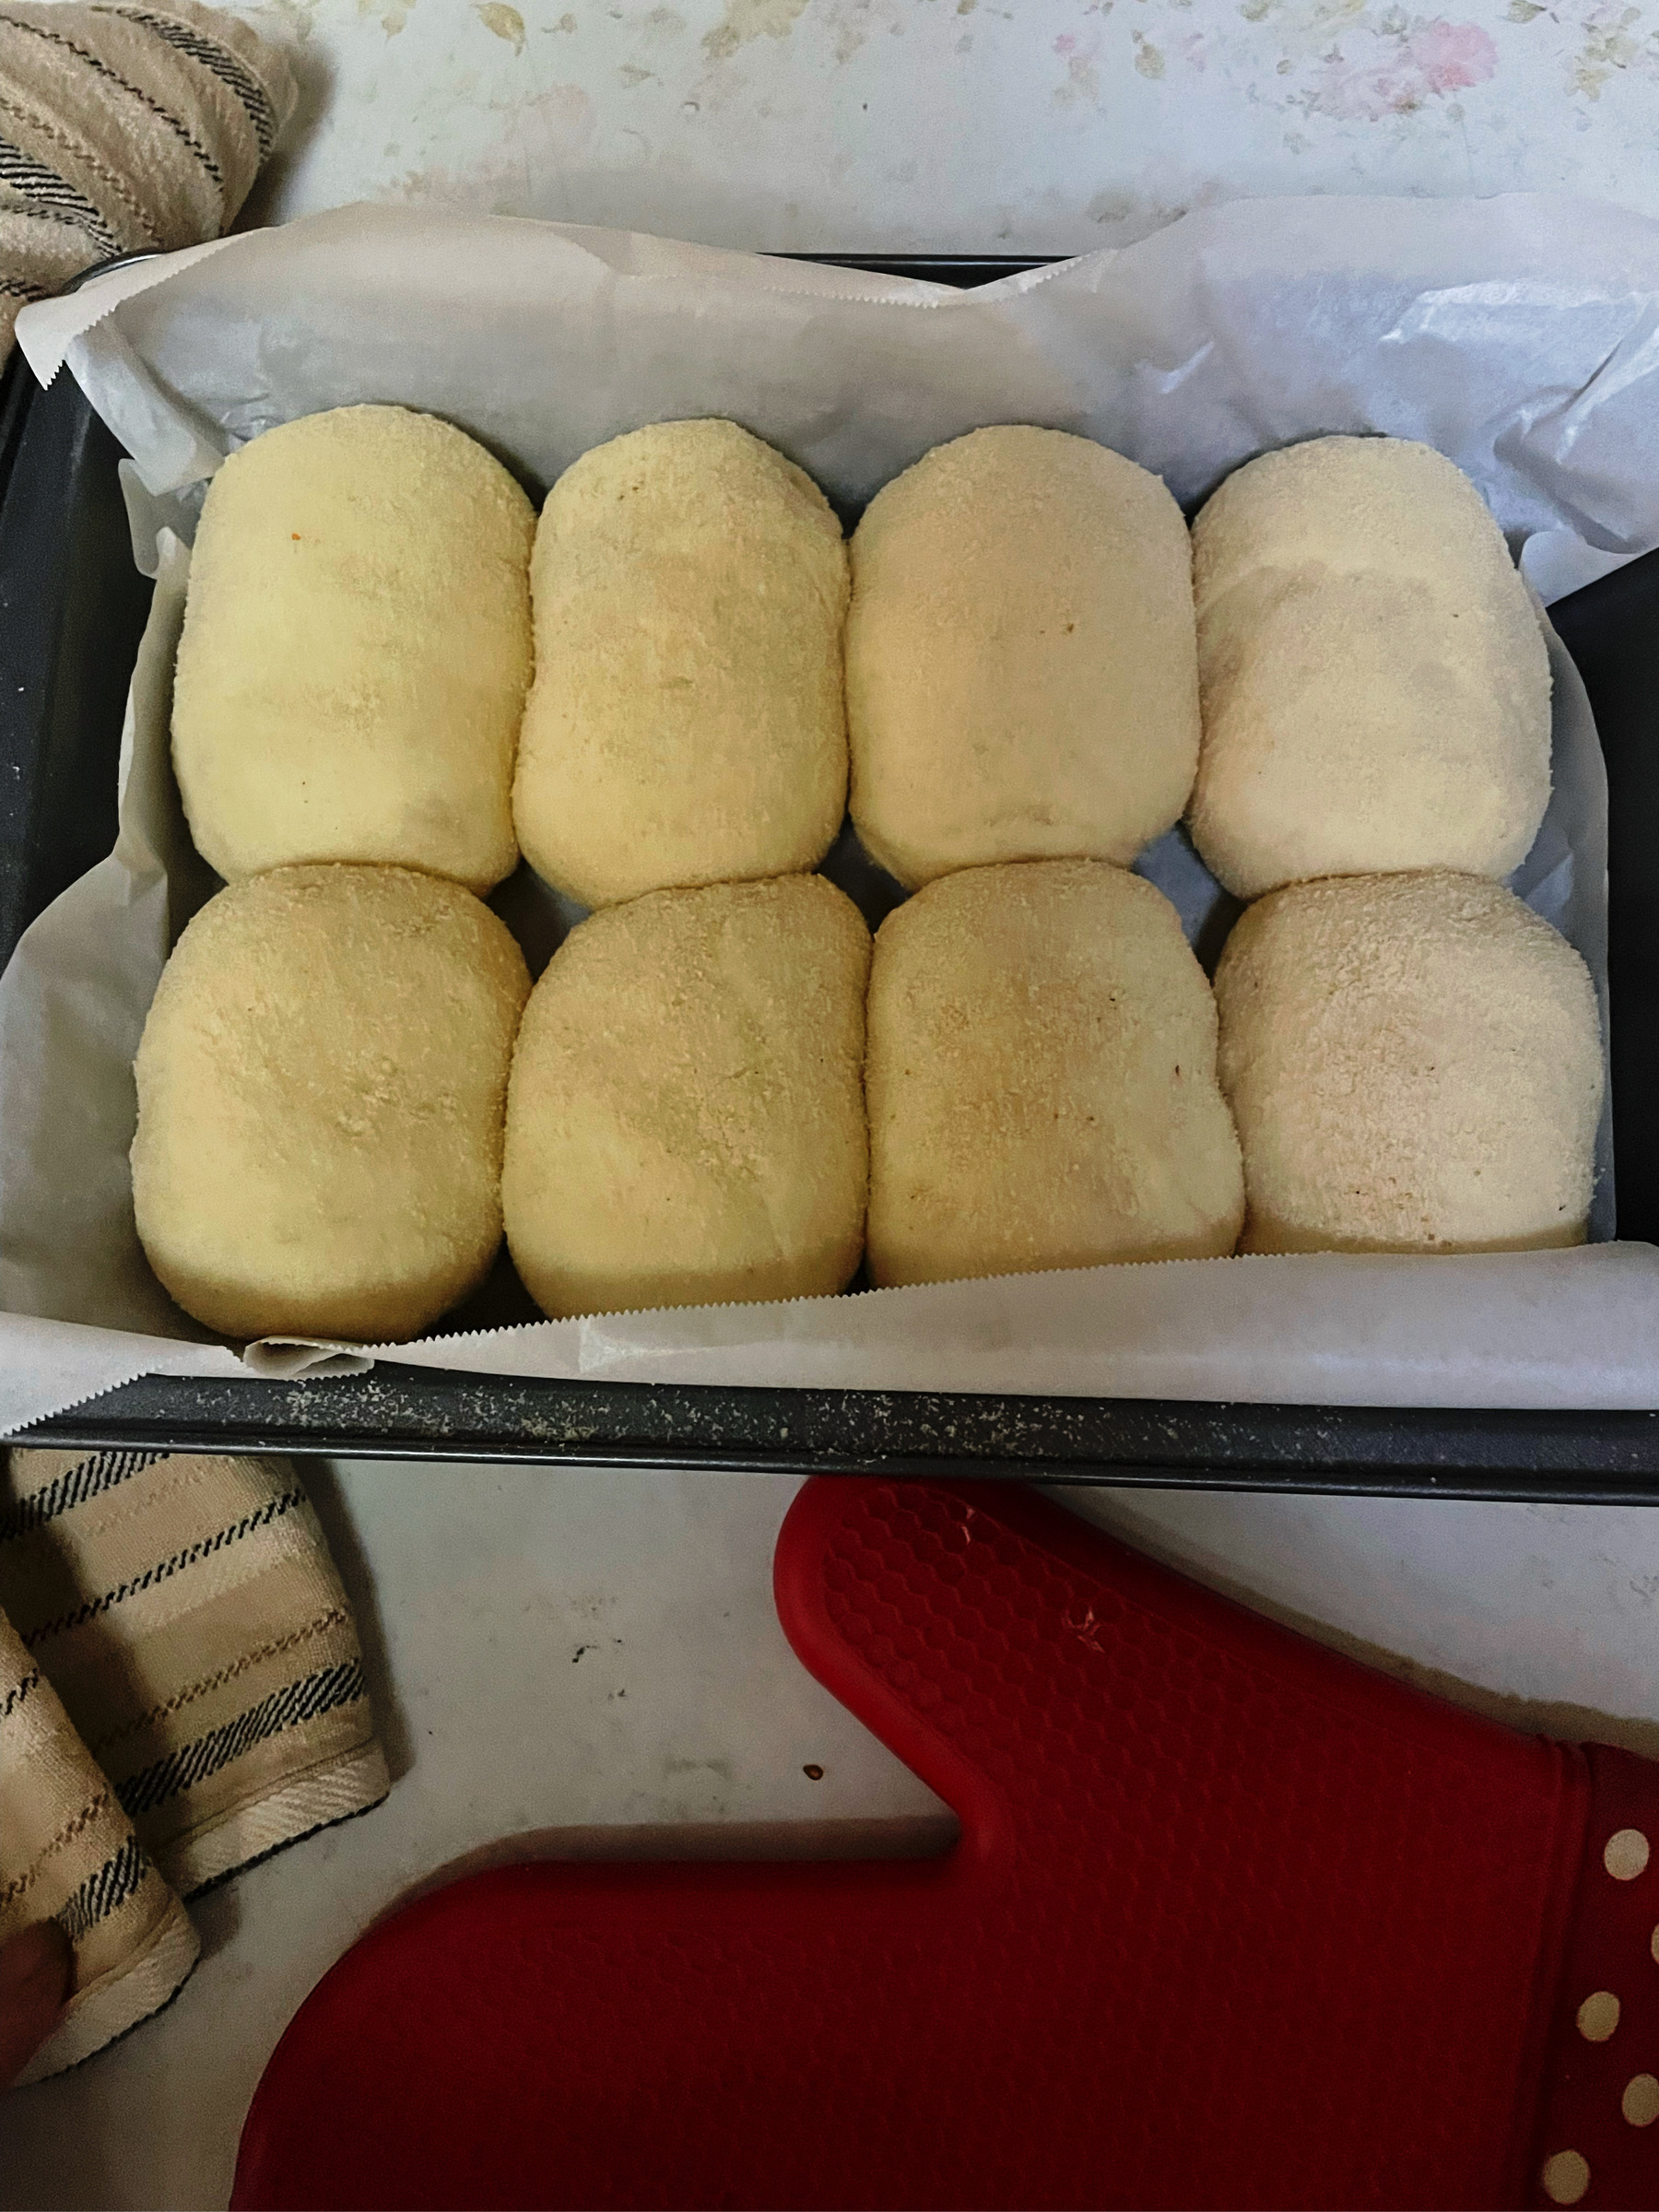 bread dough after it has risen